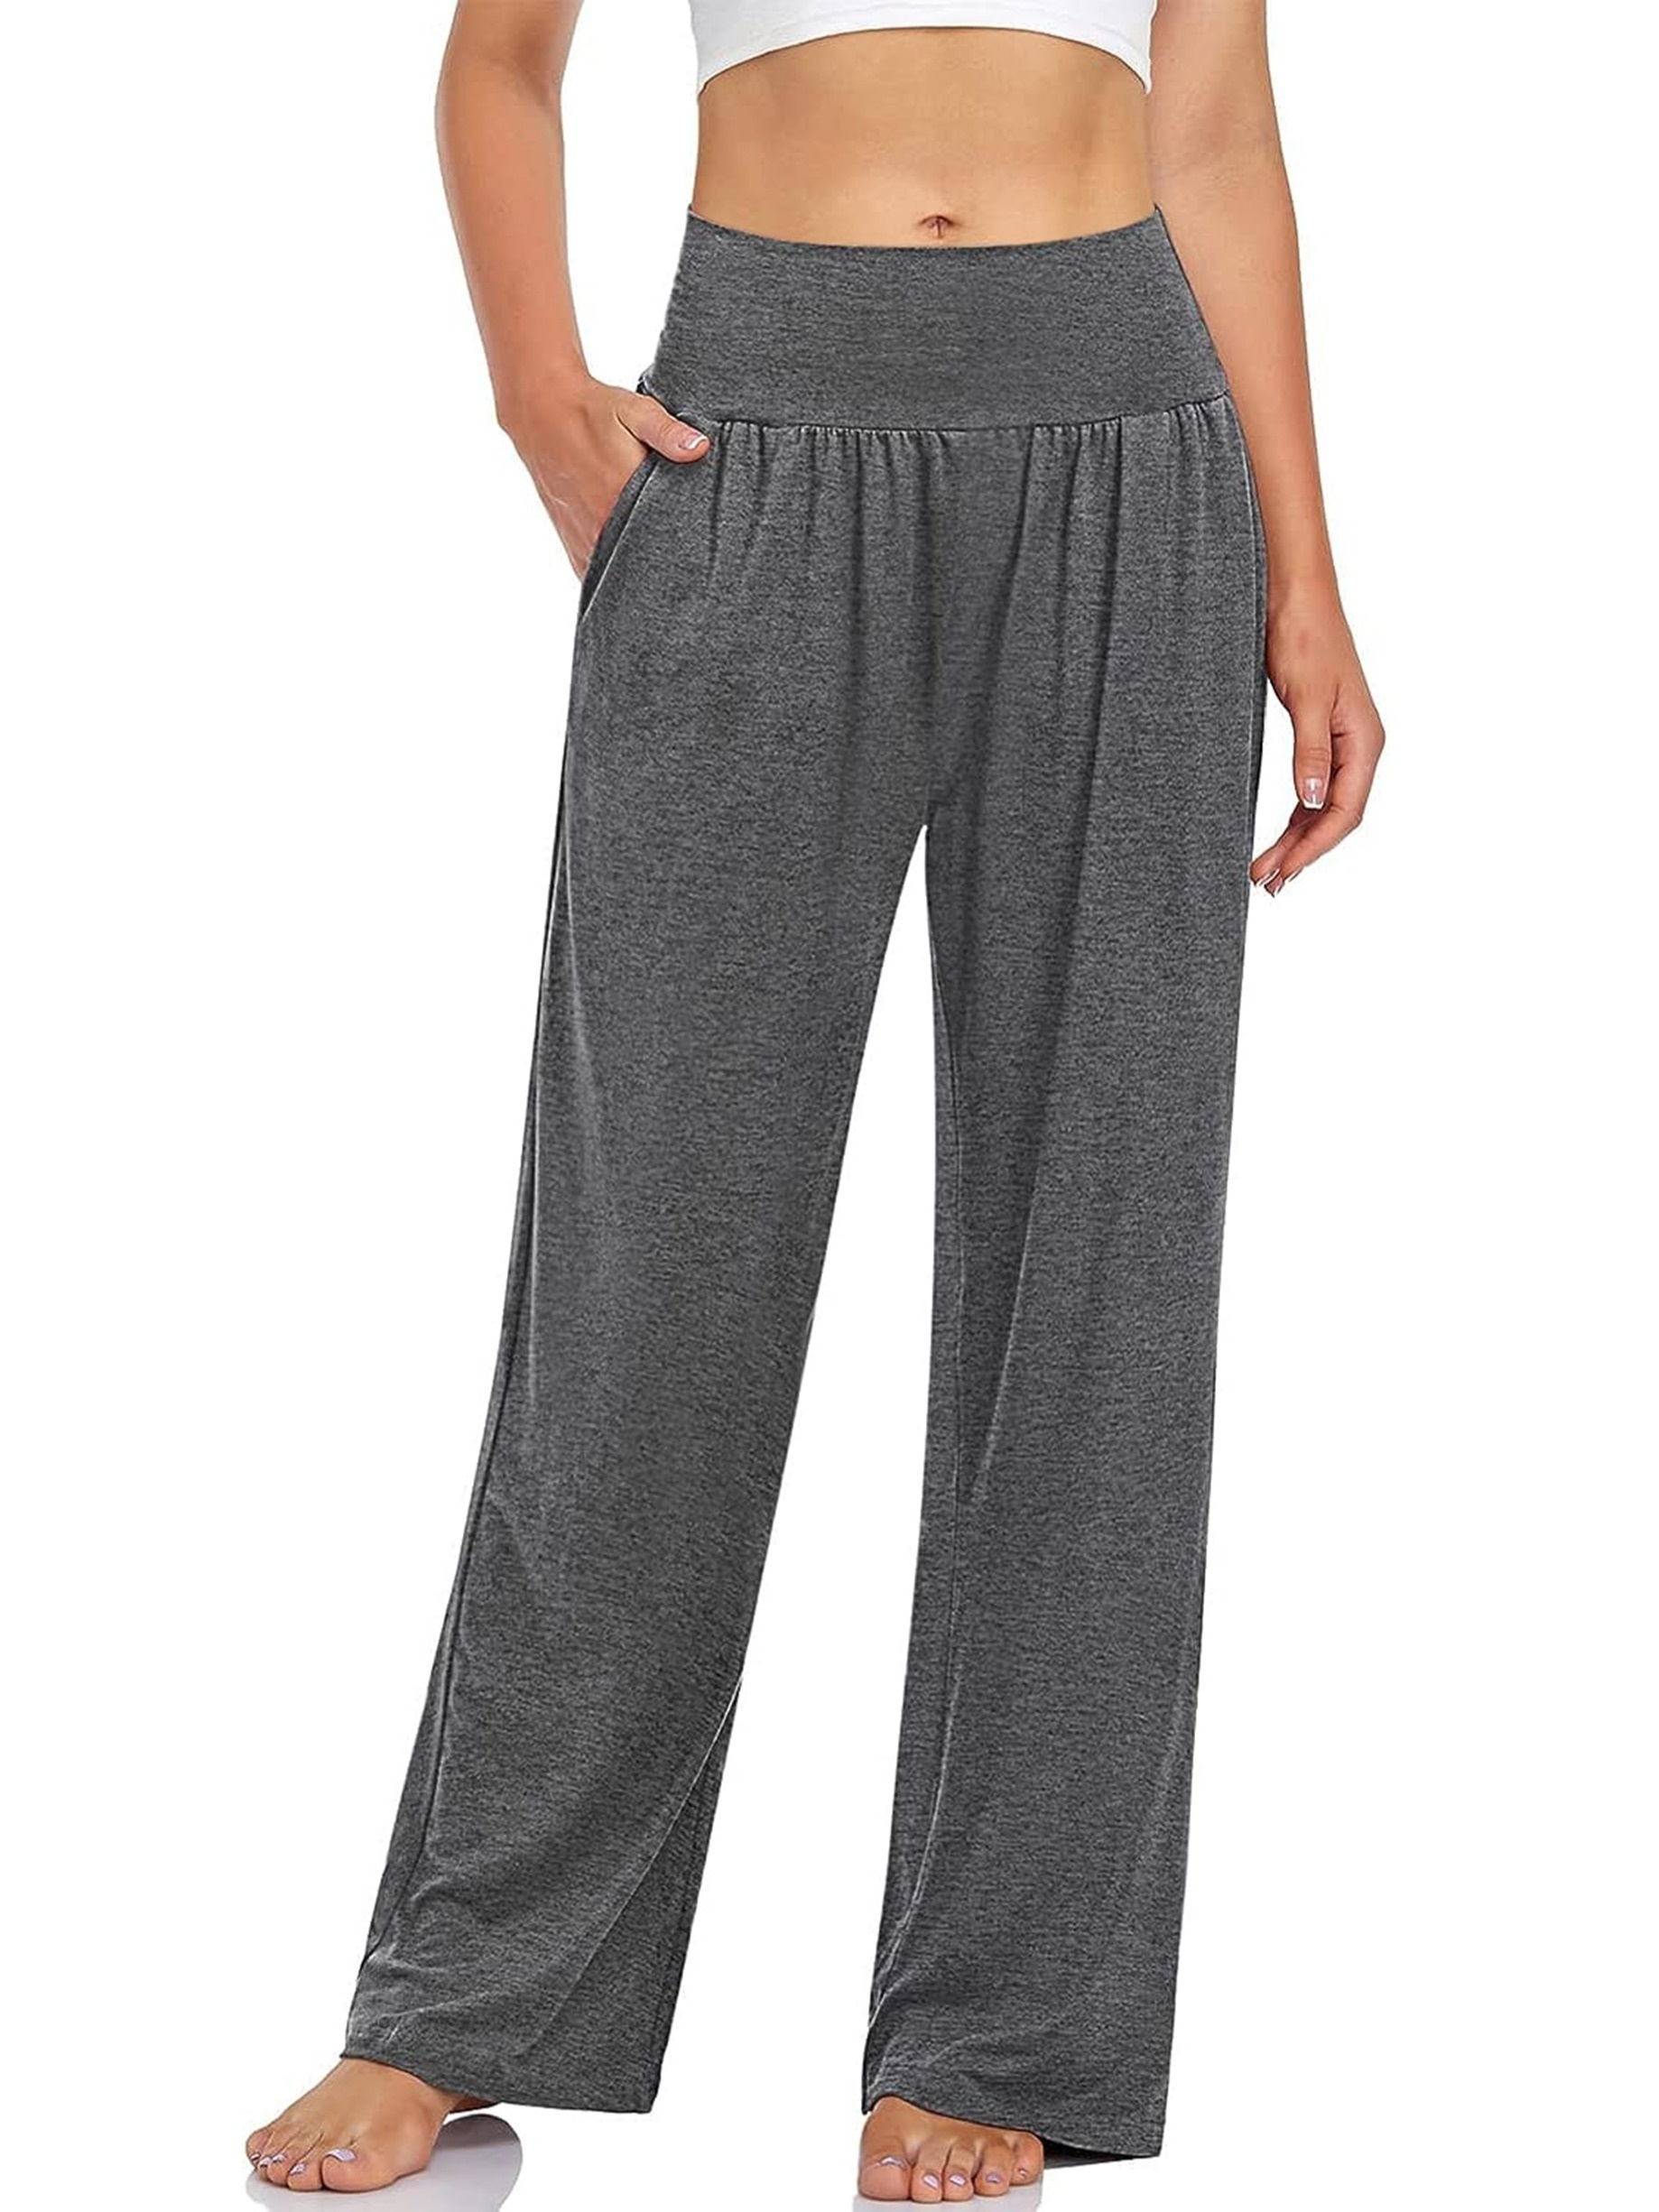 Pants Women Sweatpants Sweatpants Pants Leisure Pants Sports Pants Casual  Trousers with Pockets Sweatpant (Color : Gray, Size : Medium) : :  Clothing, Shoes & Accessories